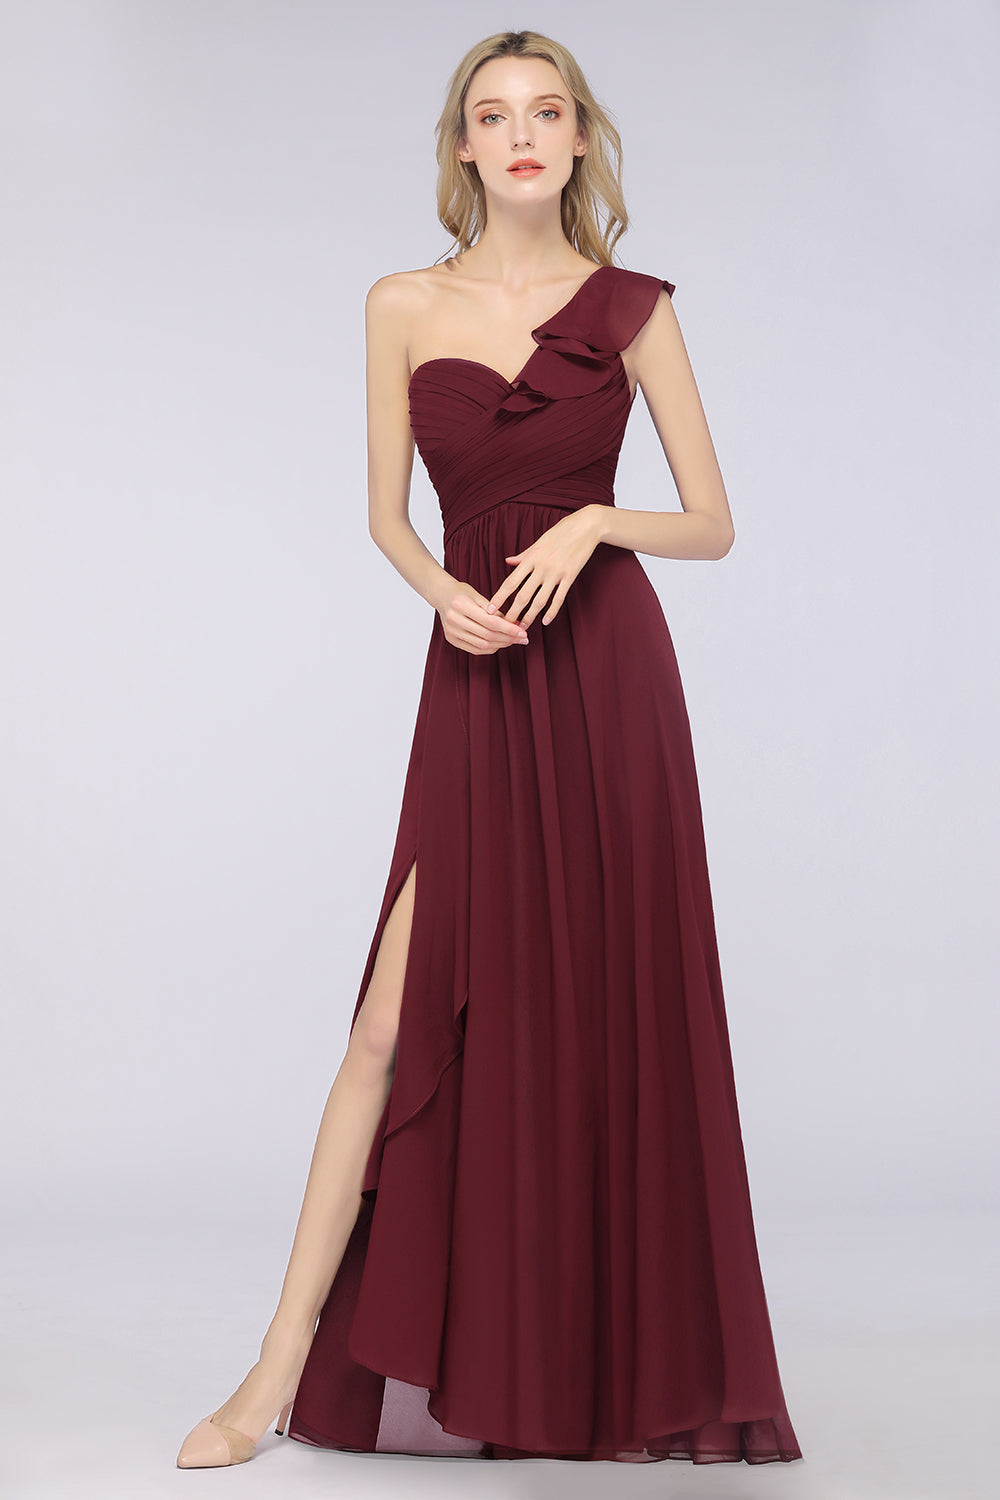 Gorgeous Sweetheart Ruffle Burgundy Chiffon Bridesmaid Dress With One-shoulder-27dress